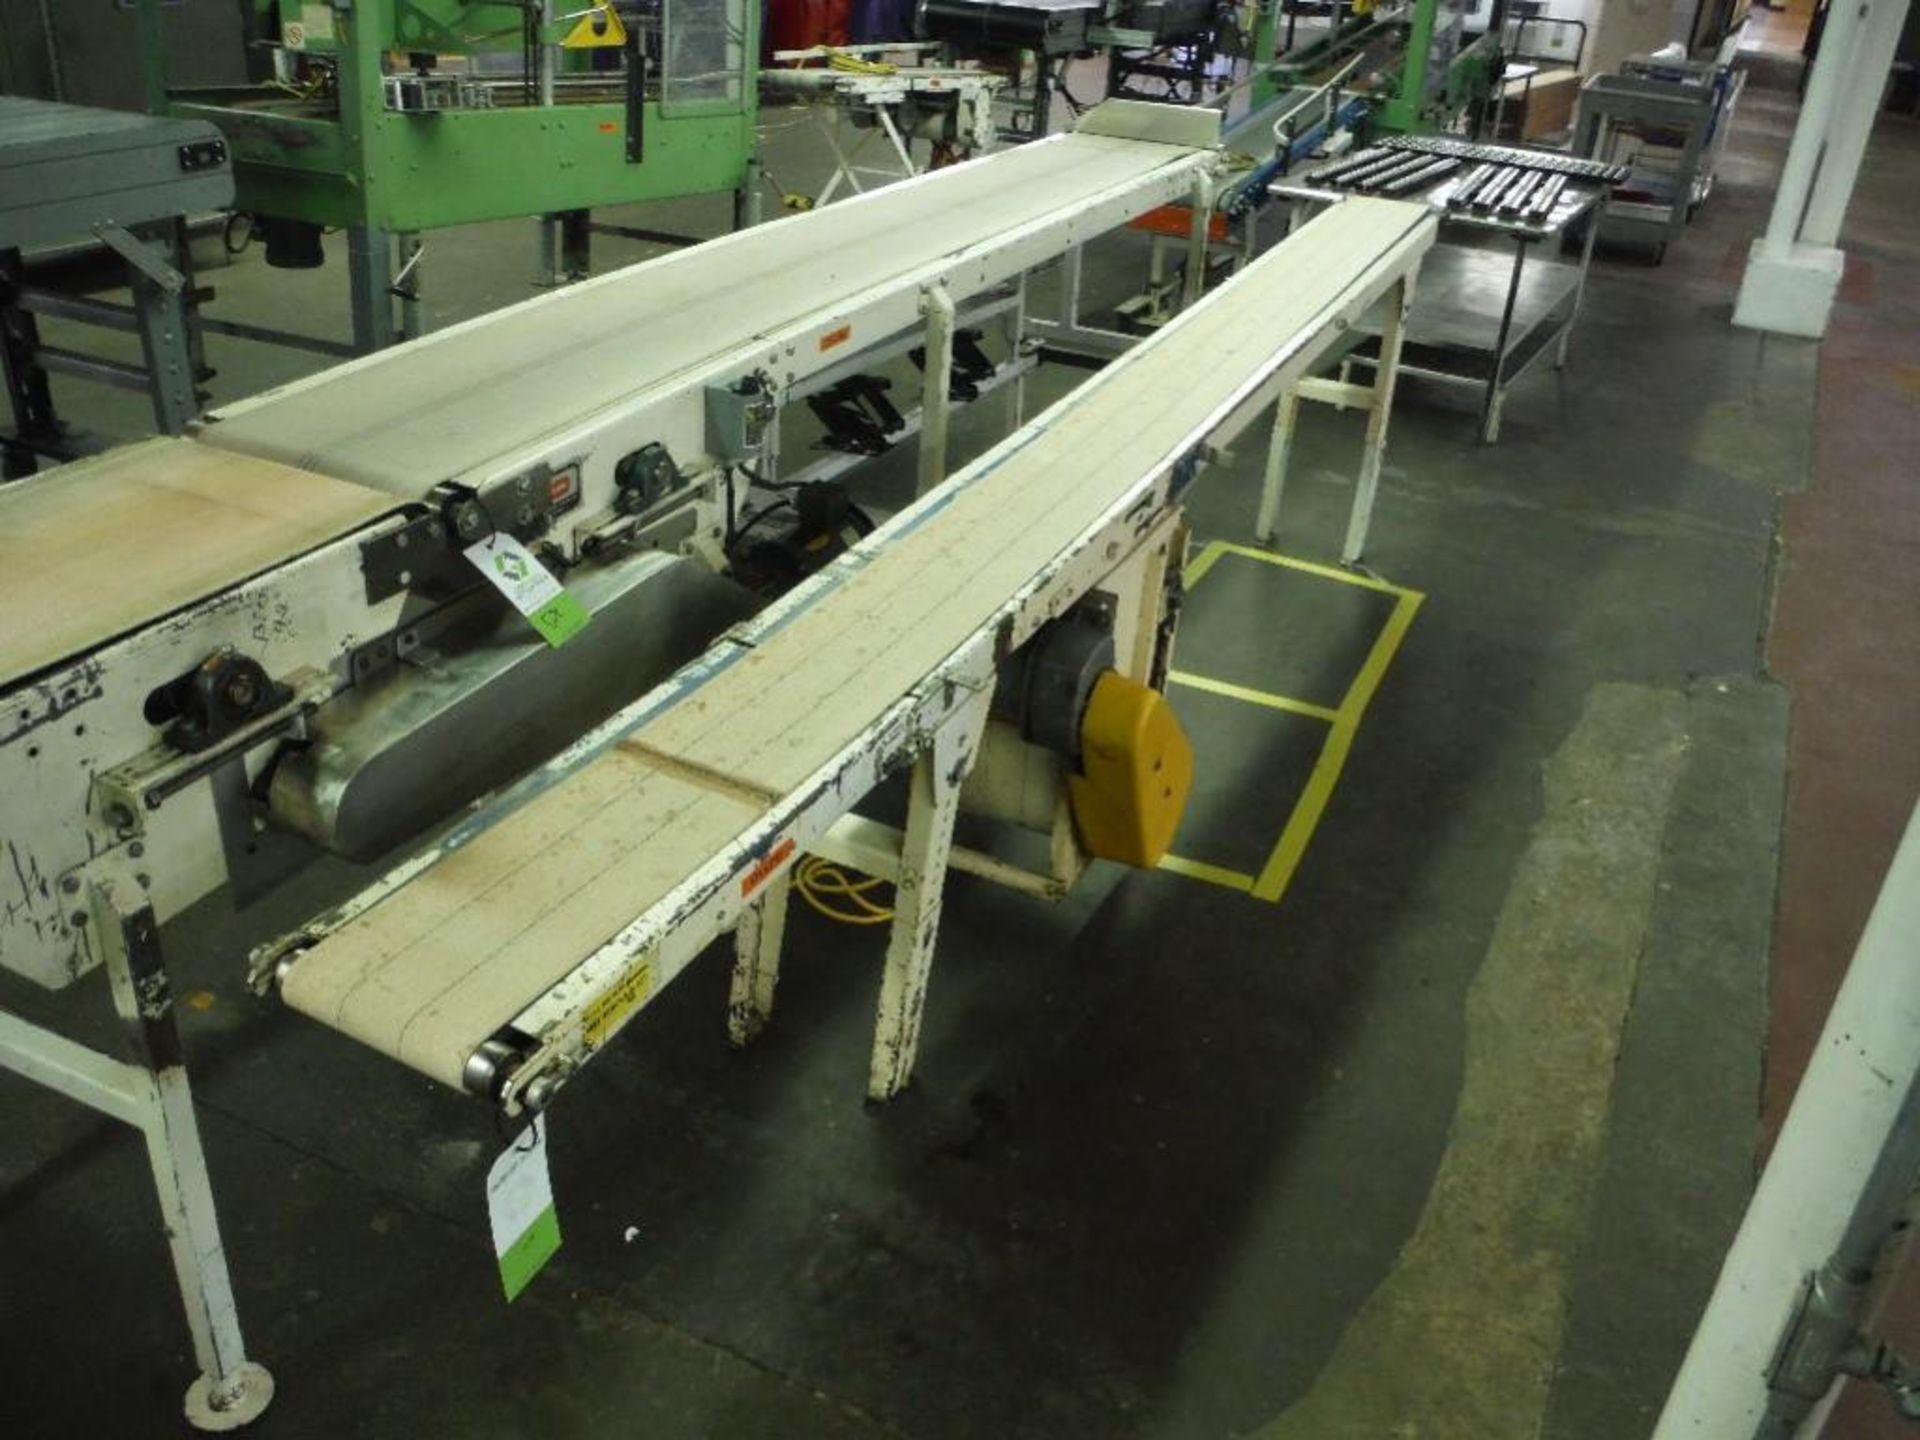 Belt conveyor 148 in. long x 8 in. wide, steel frame, motor and gearbox - Rigging Fee: $150